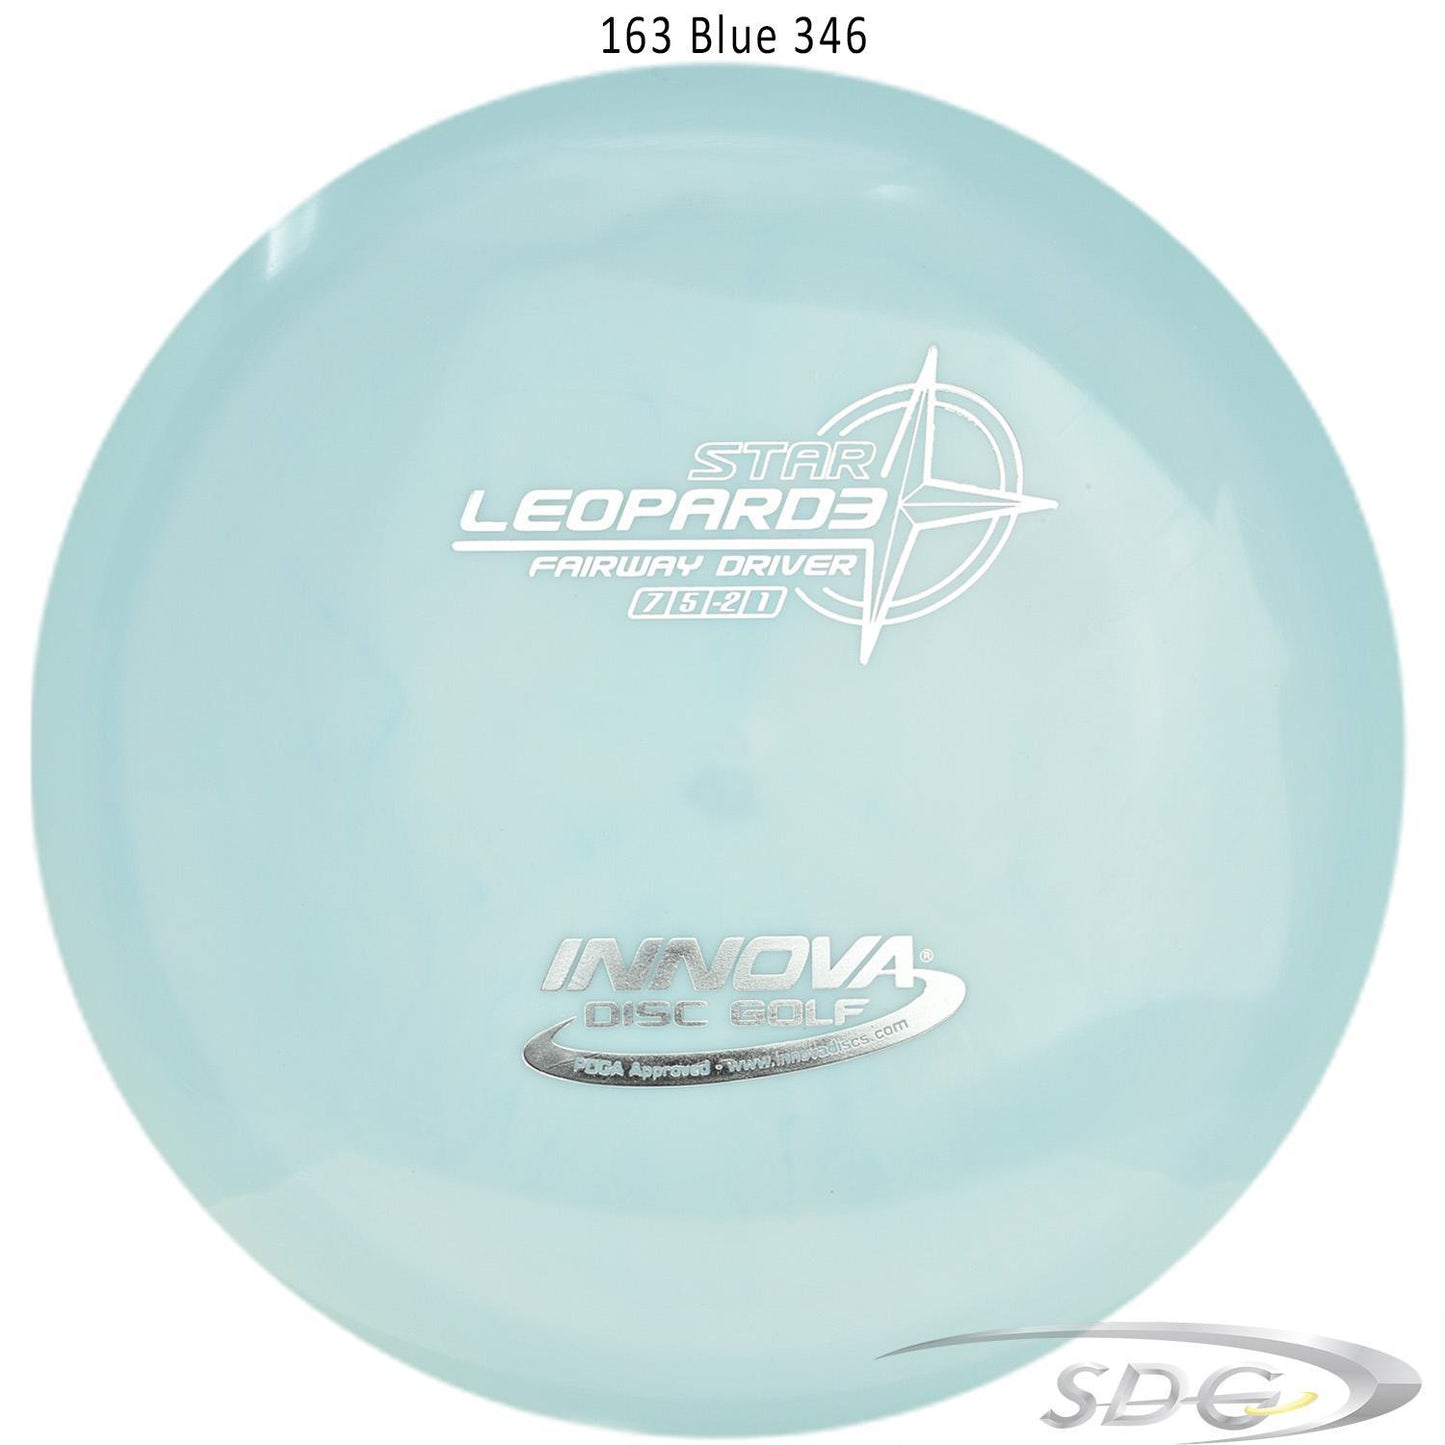 innova-star-leopard3-disc-golf-fairway-driver 163 Blue 346 